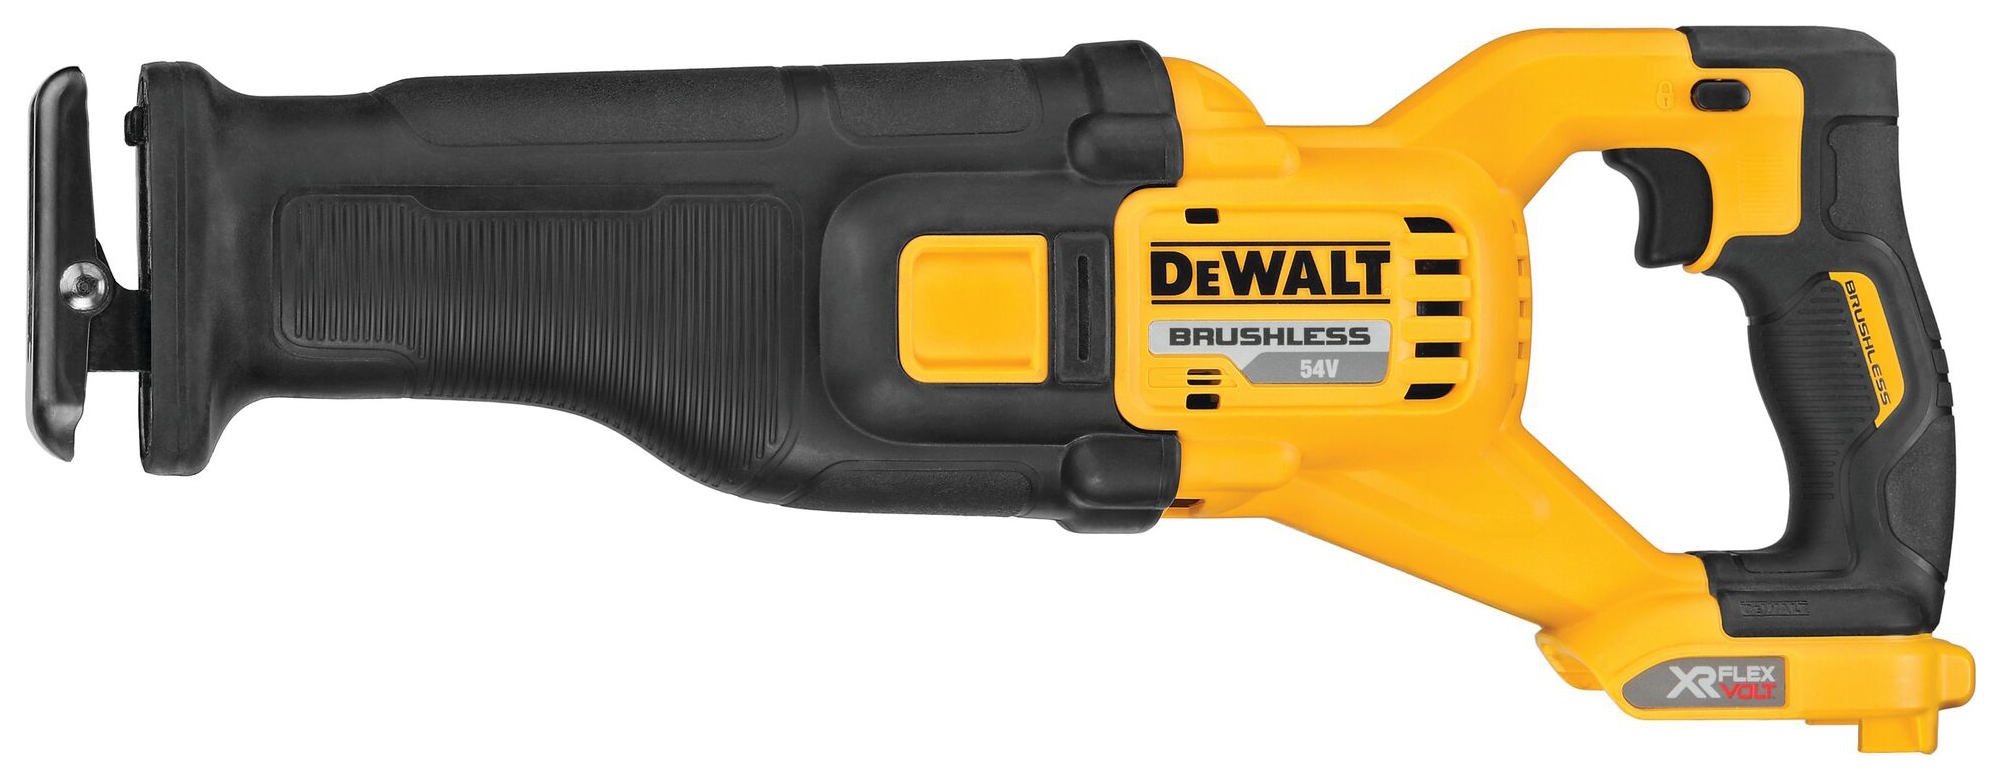 DEWALT DCS389T2-GB 54V XR FLEXVOLT Brushless 2 x 6.0Ah Cordless Reciprocating Saw